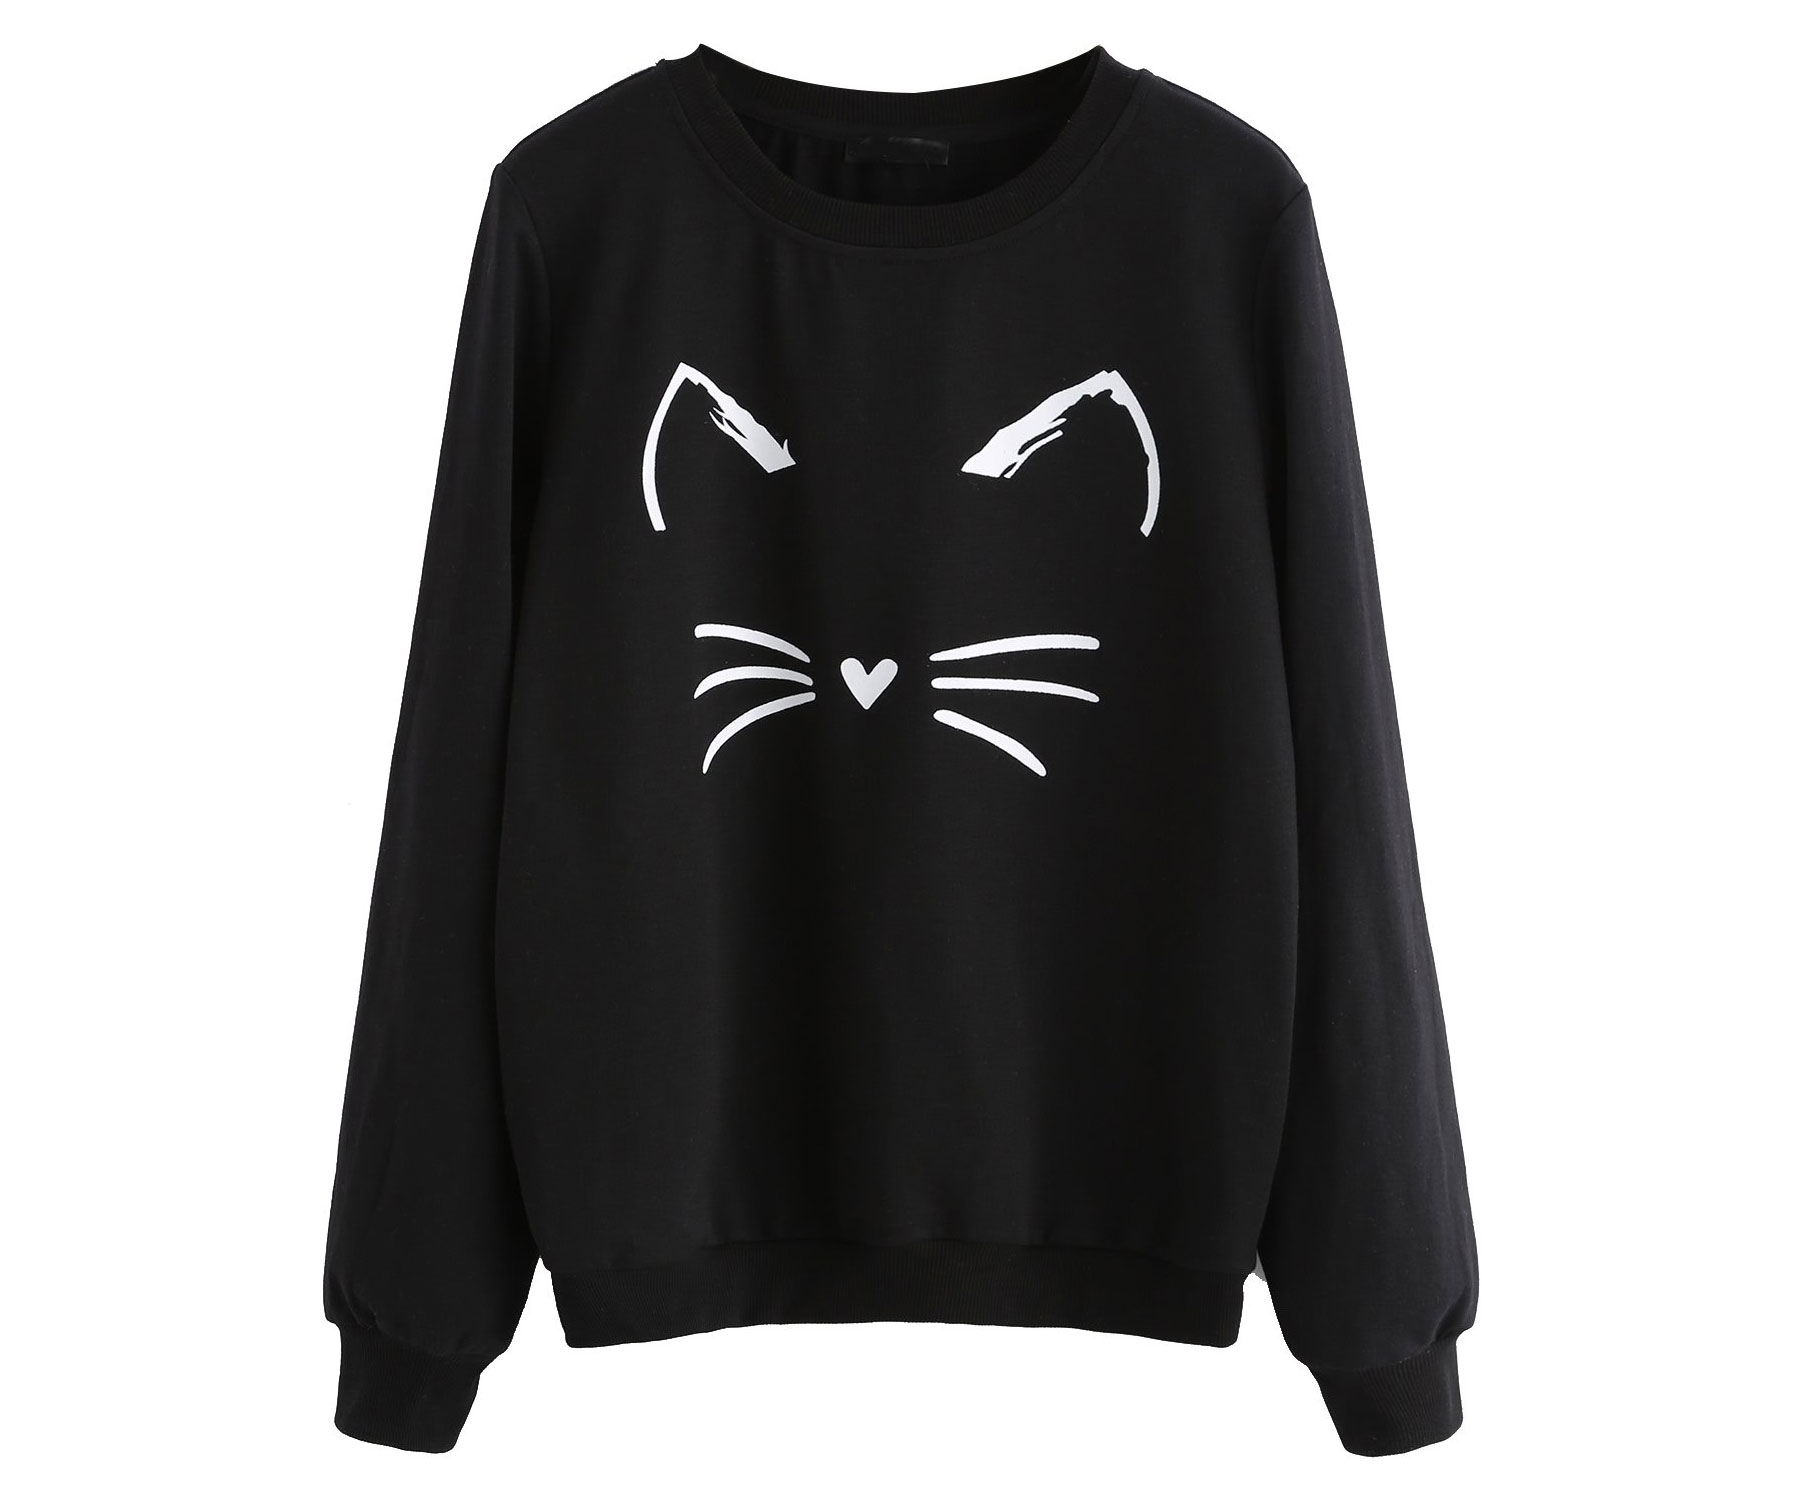 Cat Print Sweatshirt